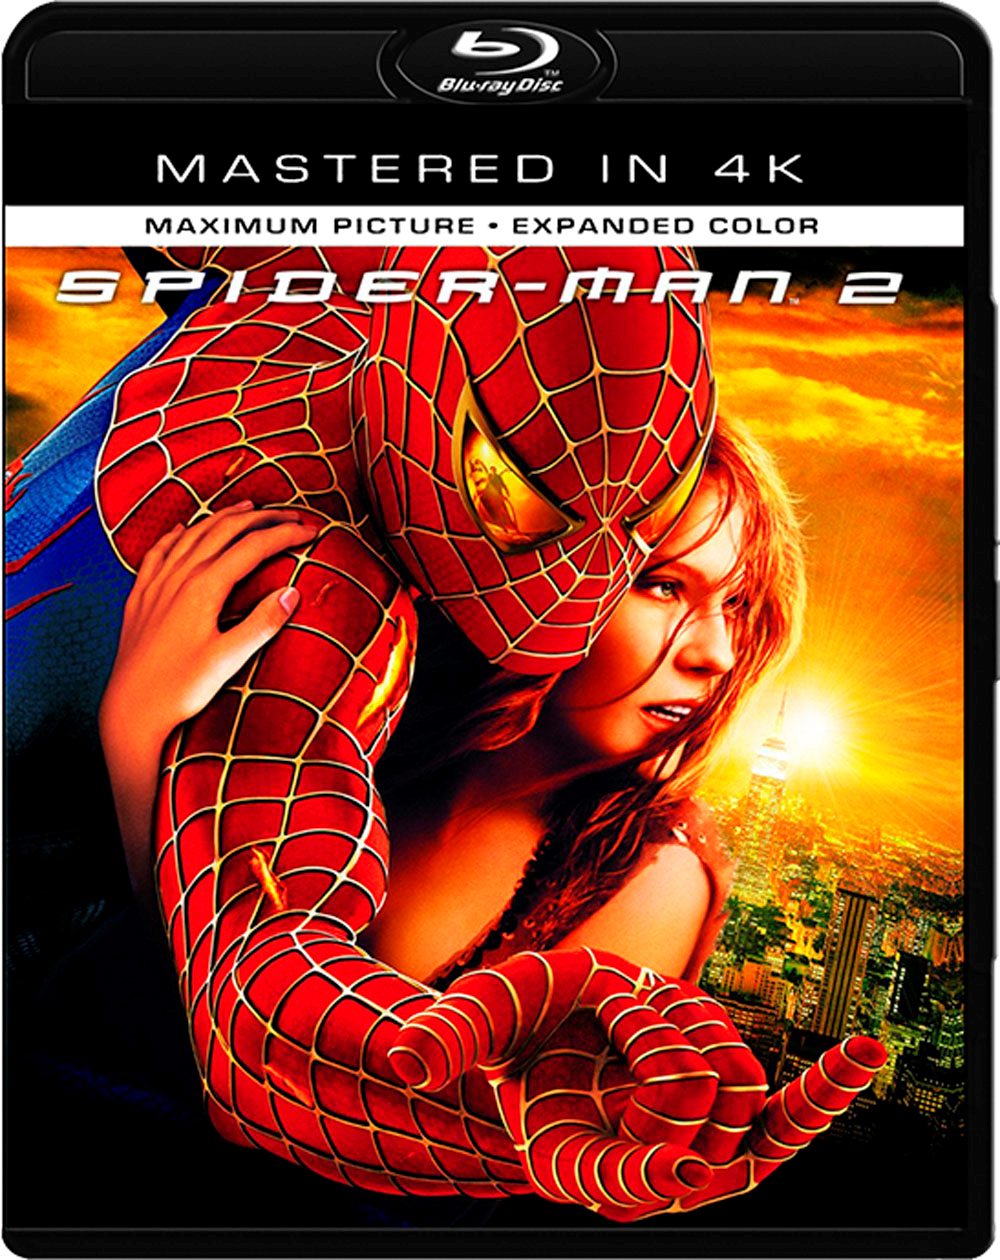 [蜘蛛侠2].Spider-Man.2.2004.EUR.UHD.BluRay.2160p.HEVC.TrueHD.7.1-NIMA4K   56.45G-1.jpg